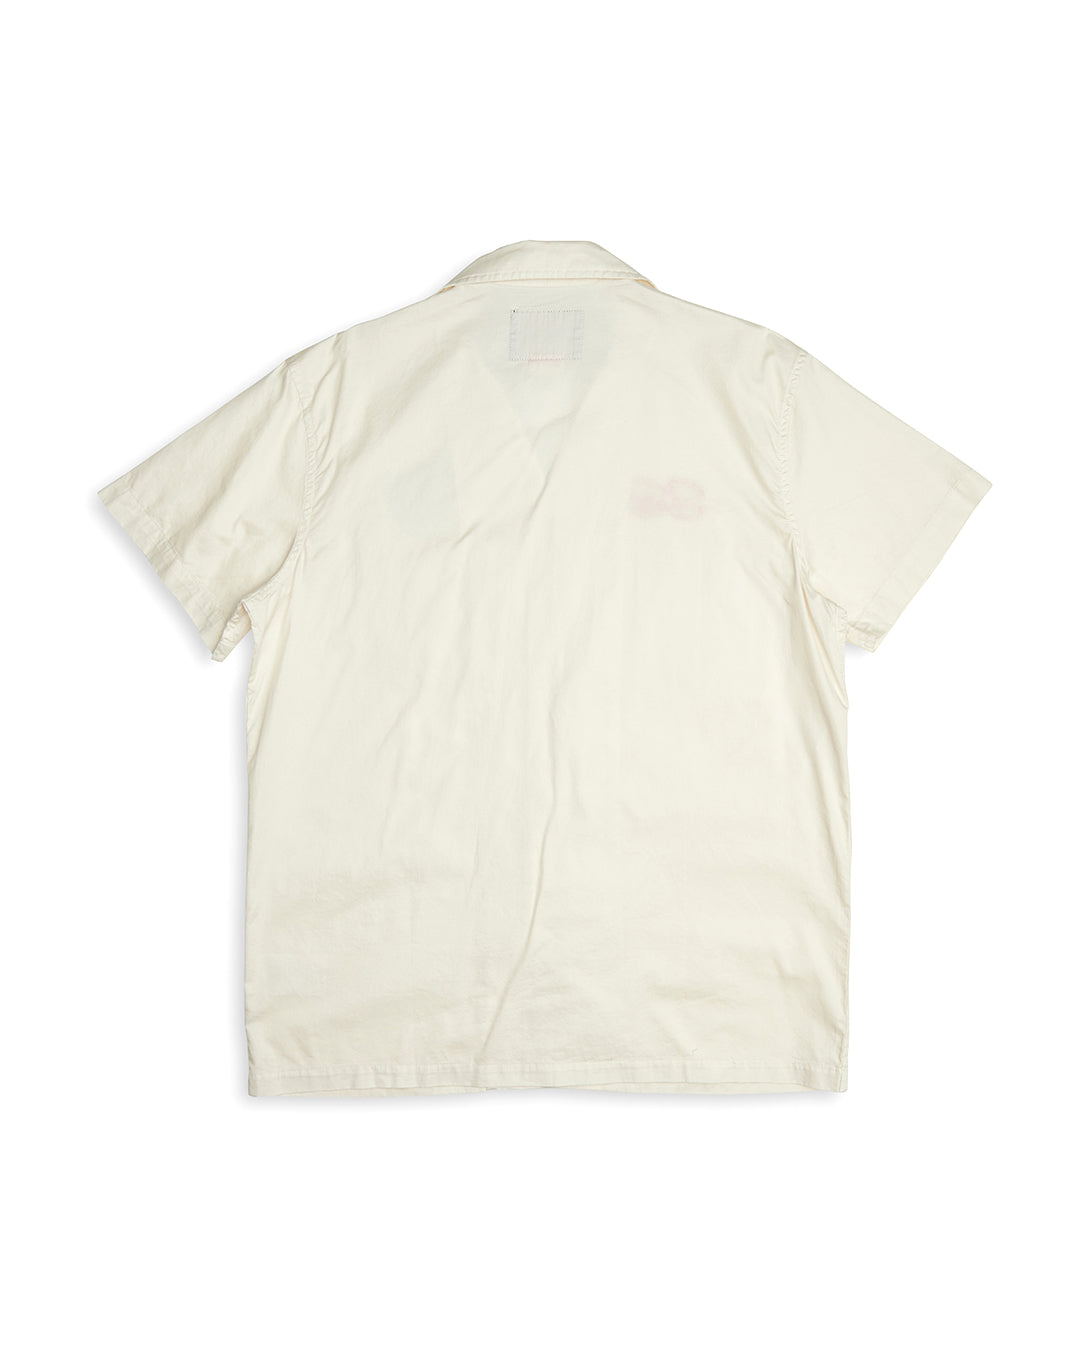 Foreman Shirt Vintage White